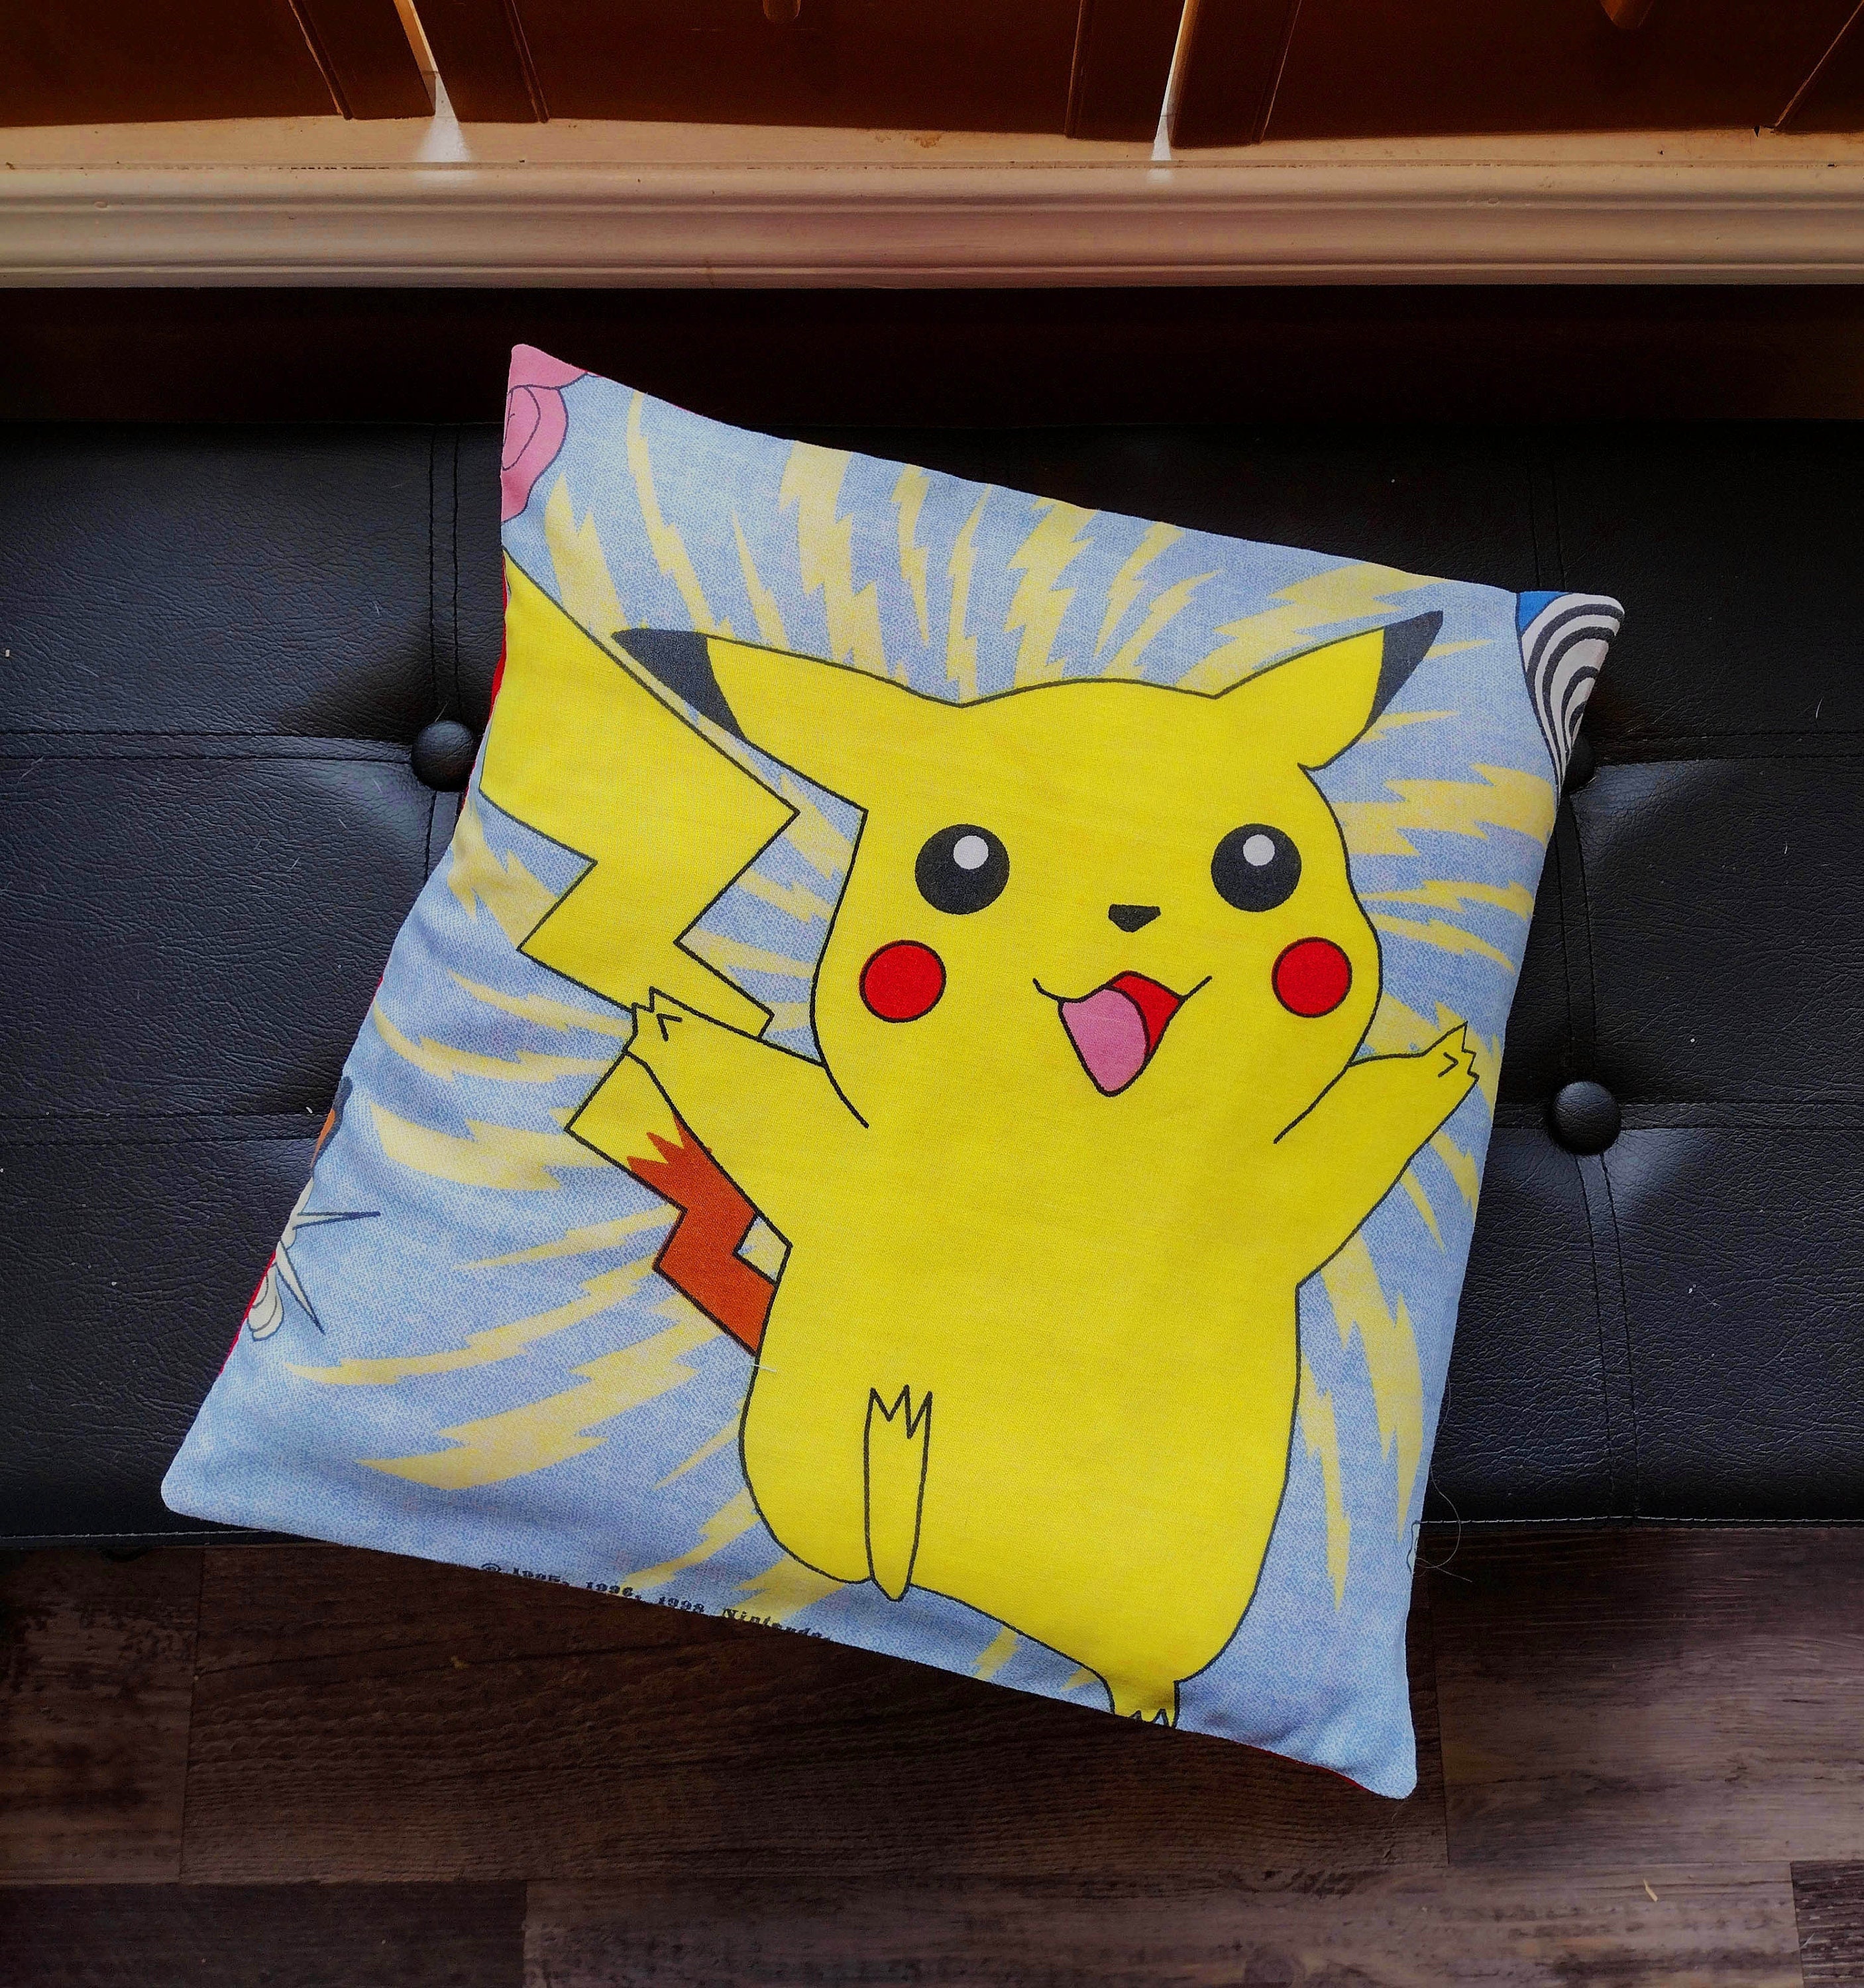 Cool Pokemon Pillowcase – Tilly Toys